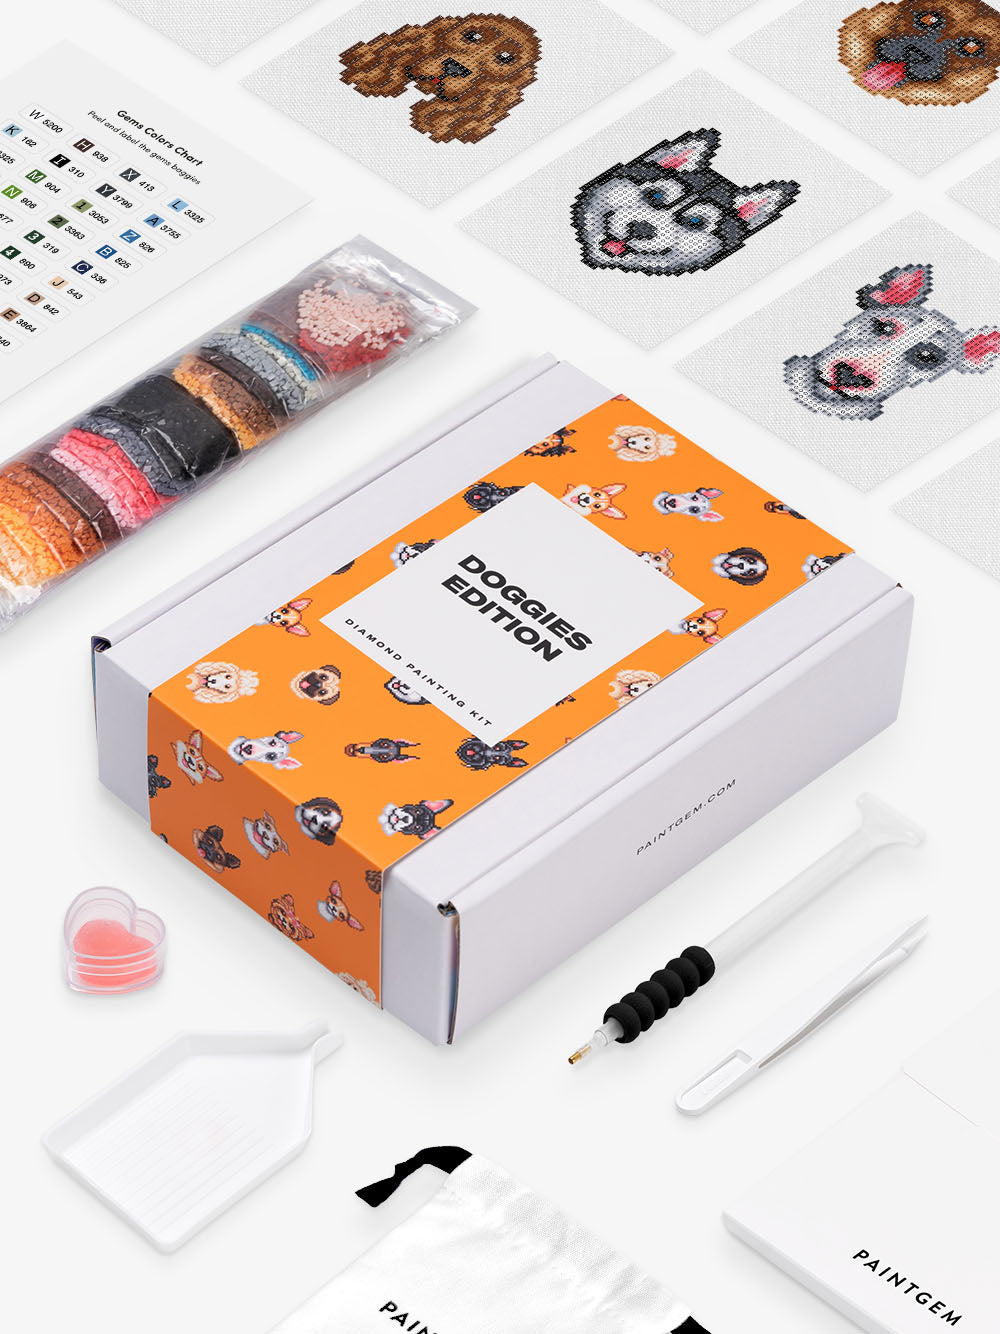 Color Dog, Crystal Diamond Painting Kits. 3 Styles to choose from (Lim–  Diamond Paintings Store